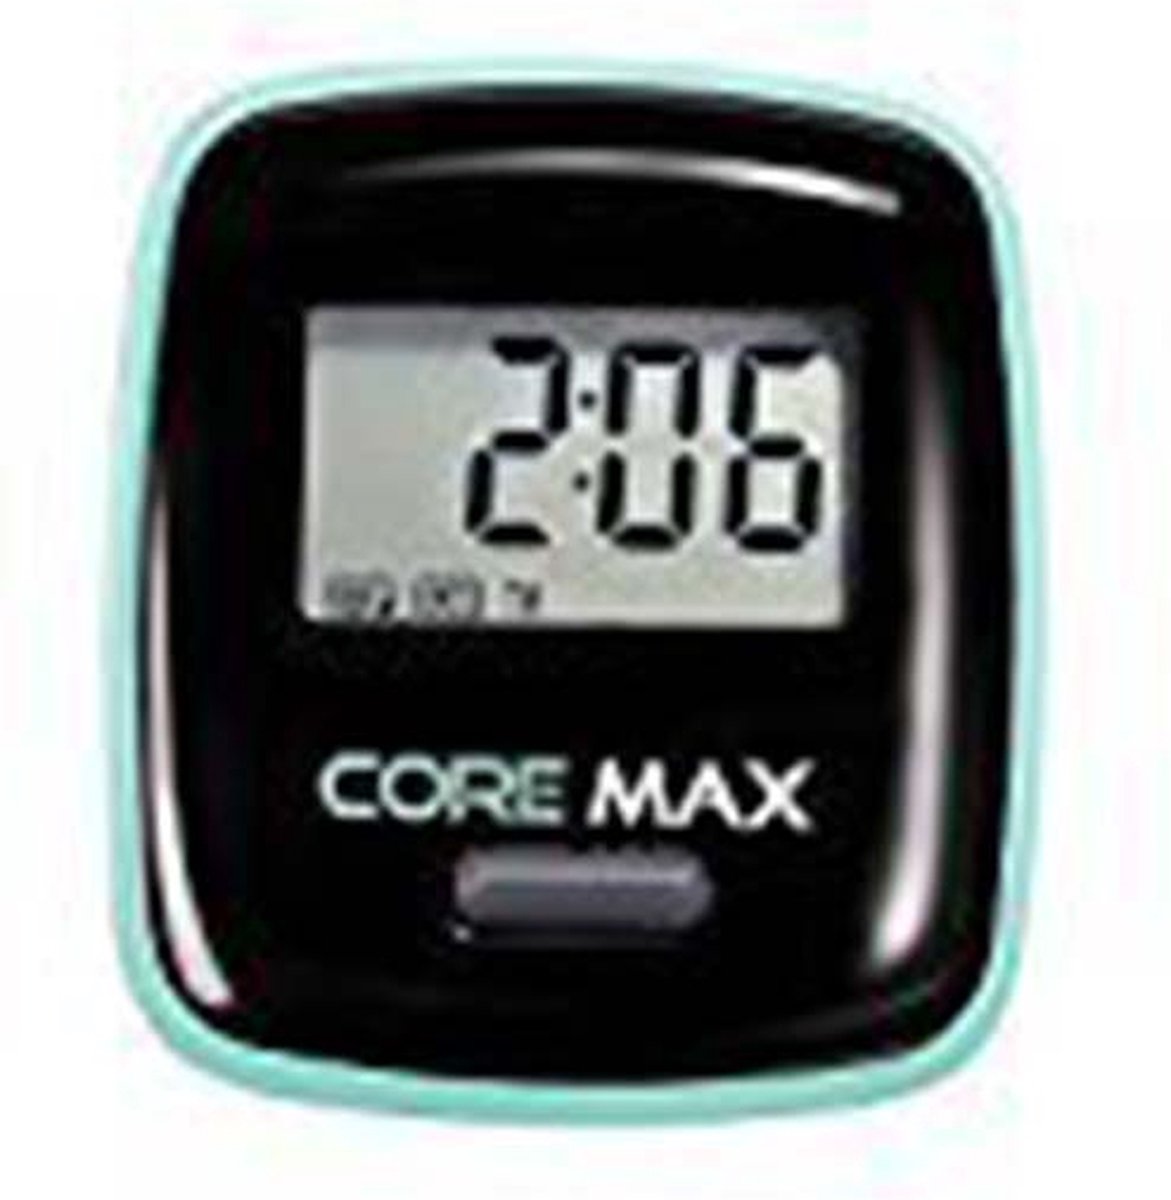 Core Max Fitness - Uitbreiding Monitor - Fitnesstimer - Timer - Core Max